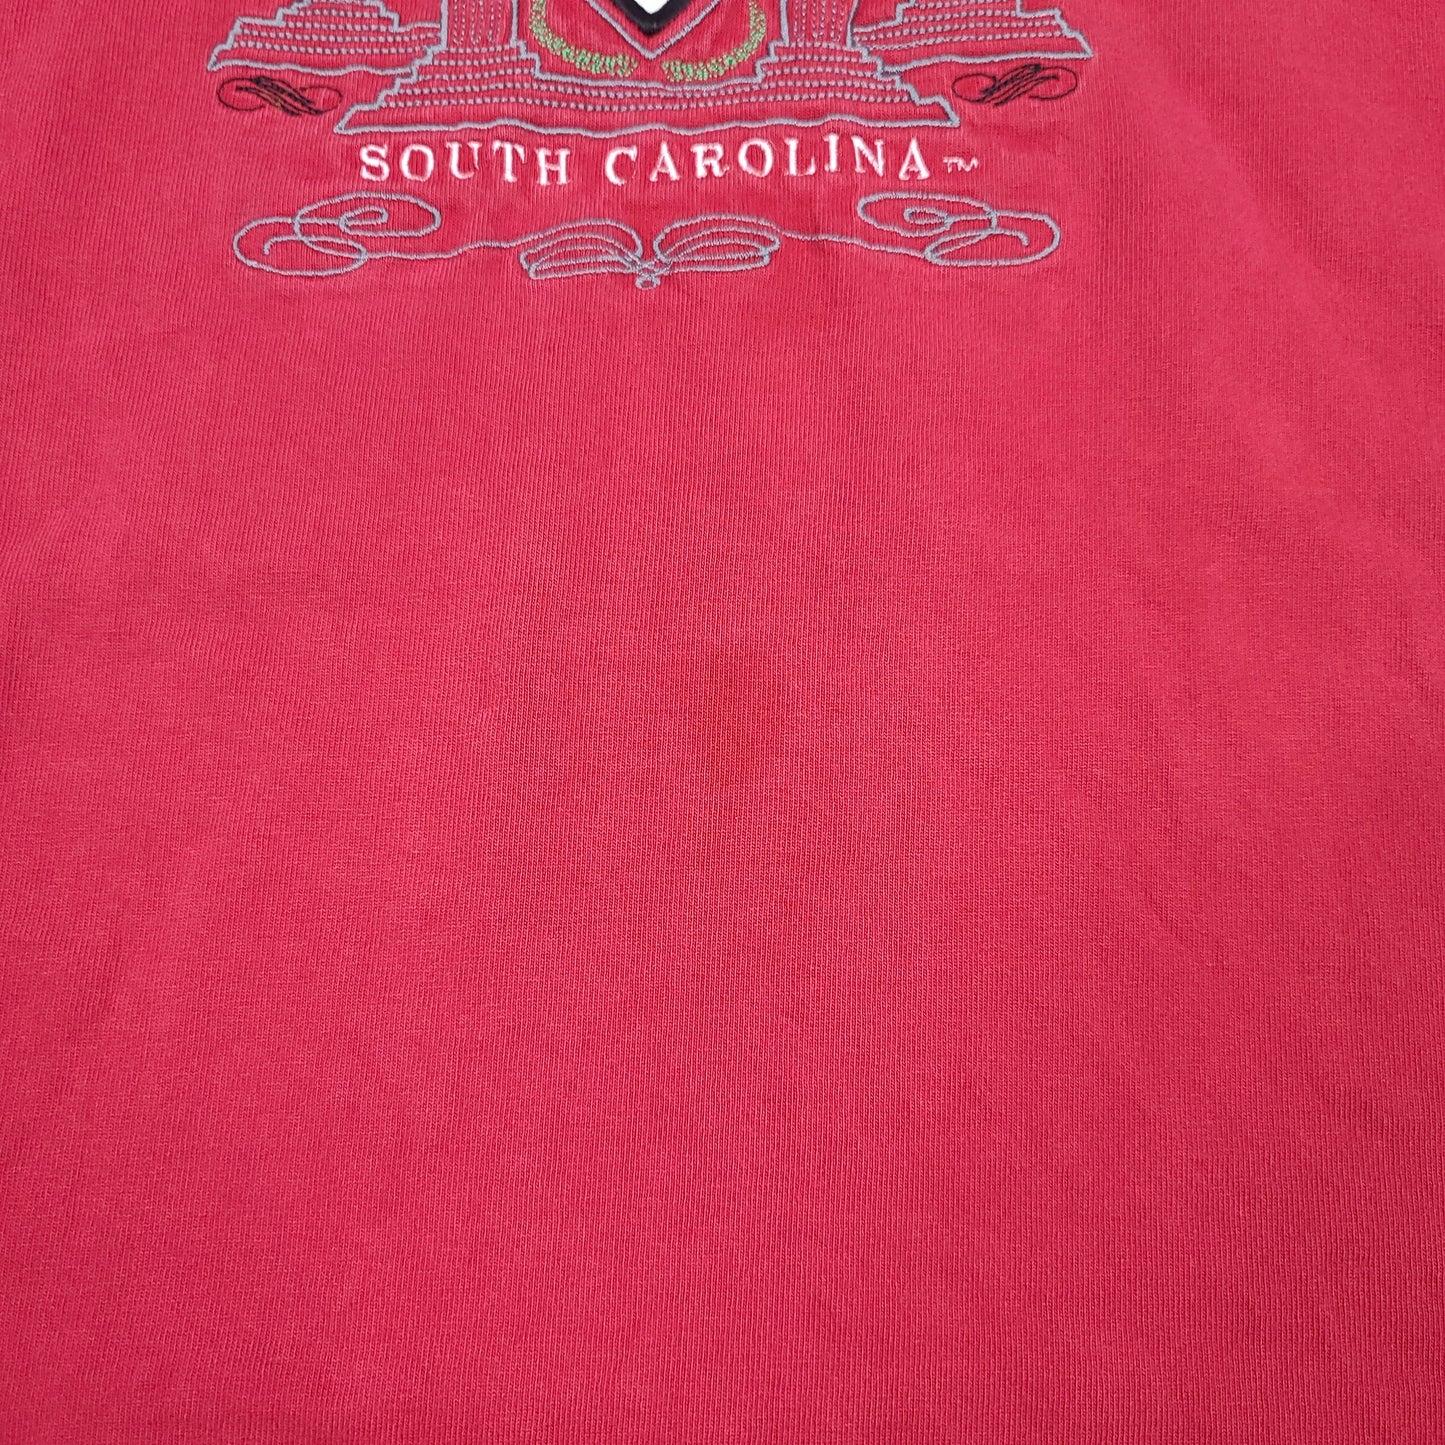 Vintage University of South Carolina Gamecocks Embroidered Tee